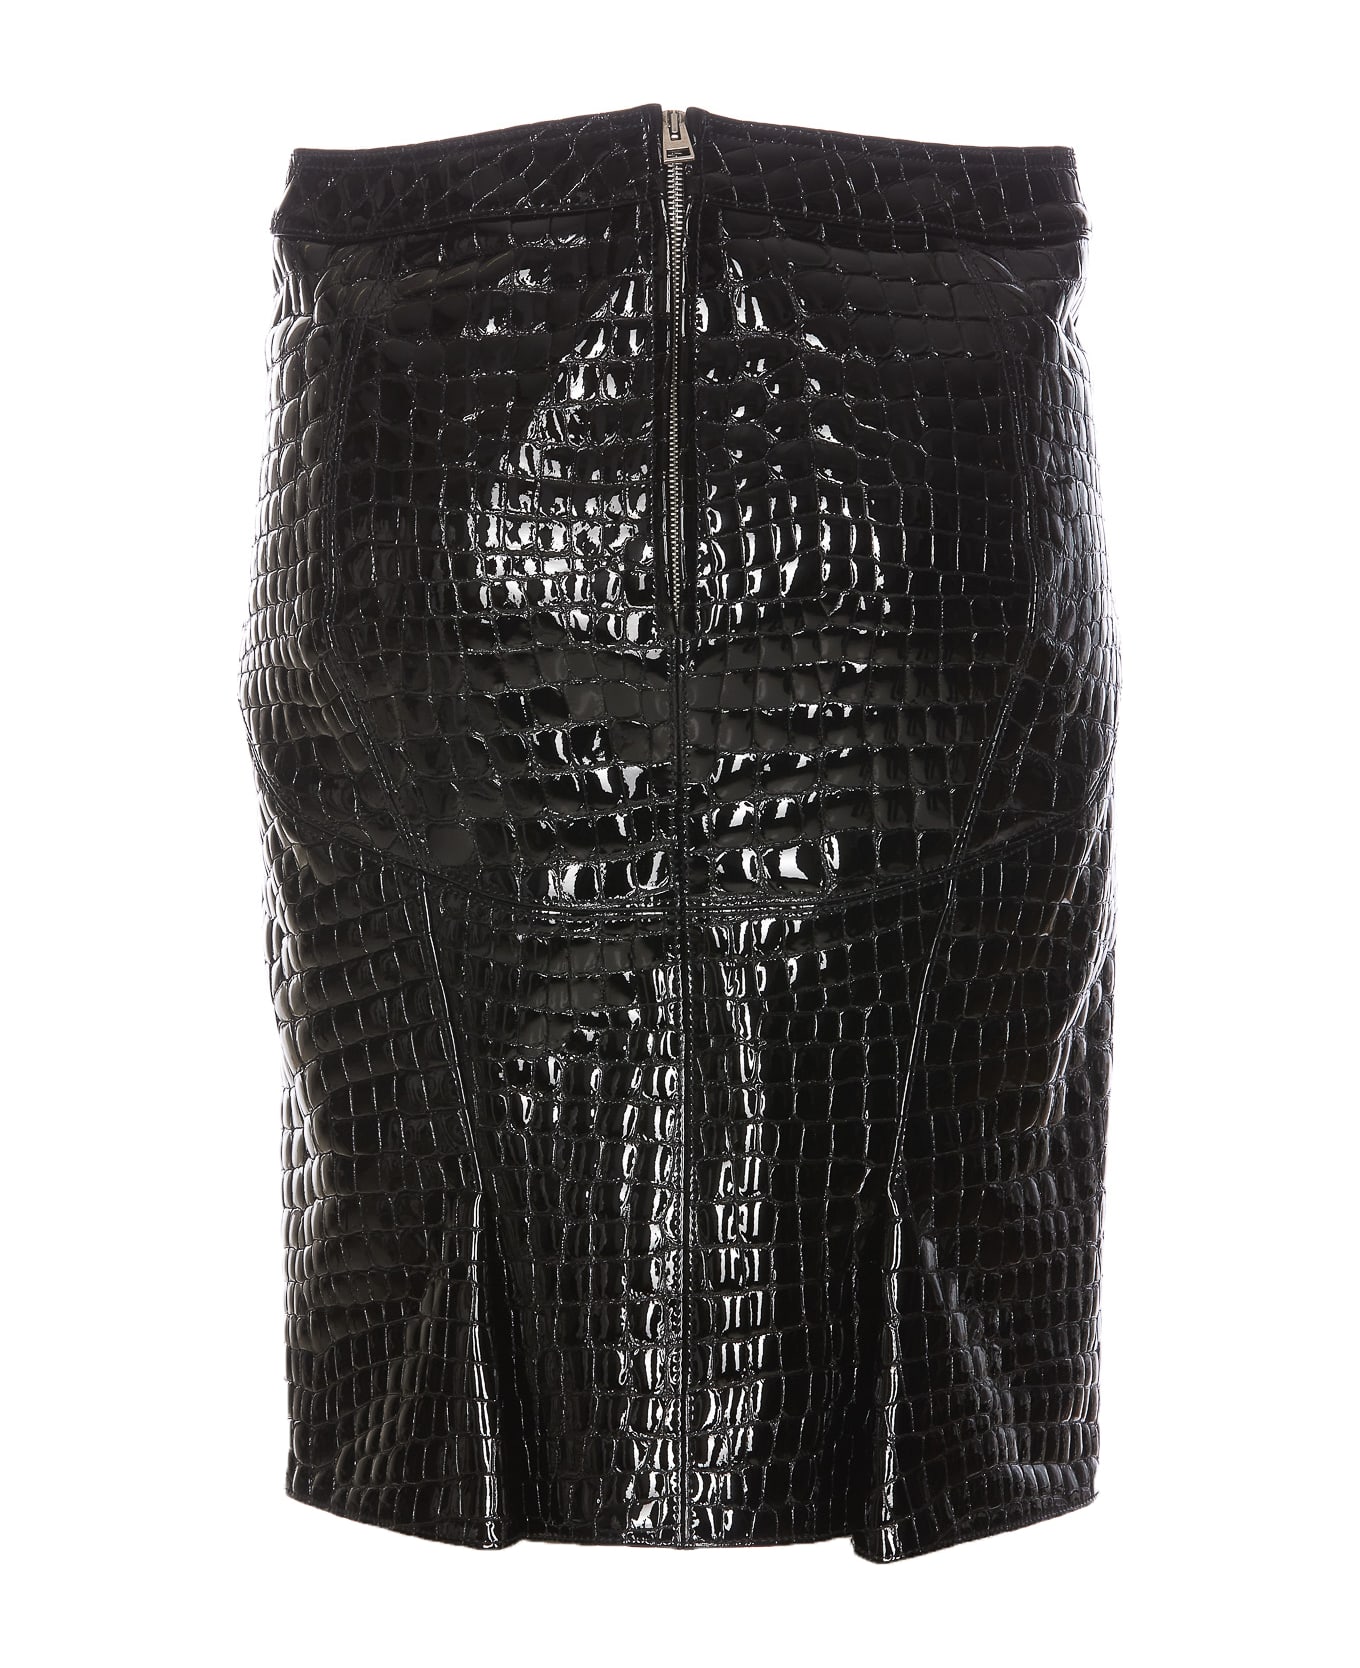 Tom Ford Glossy Croco Skirt - Black